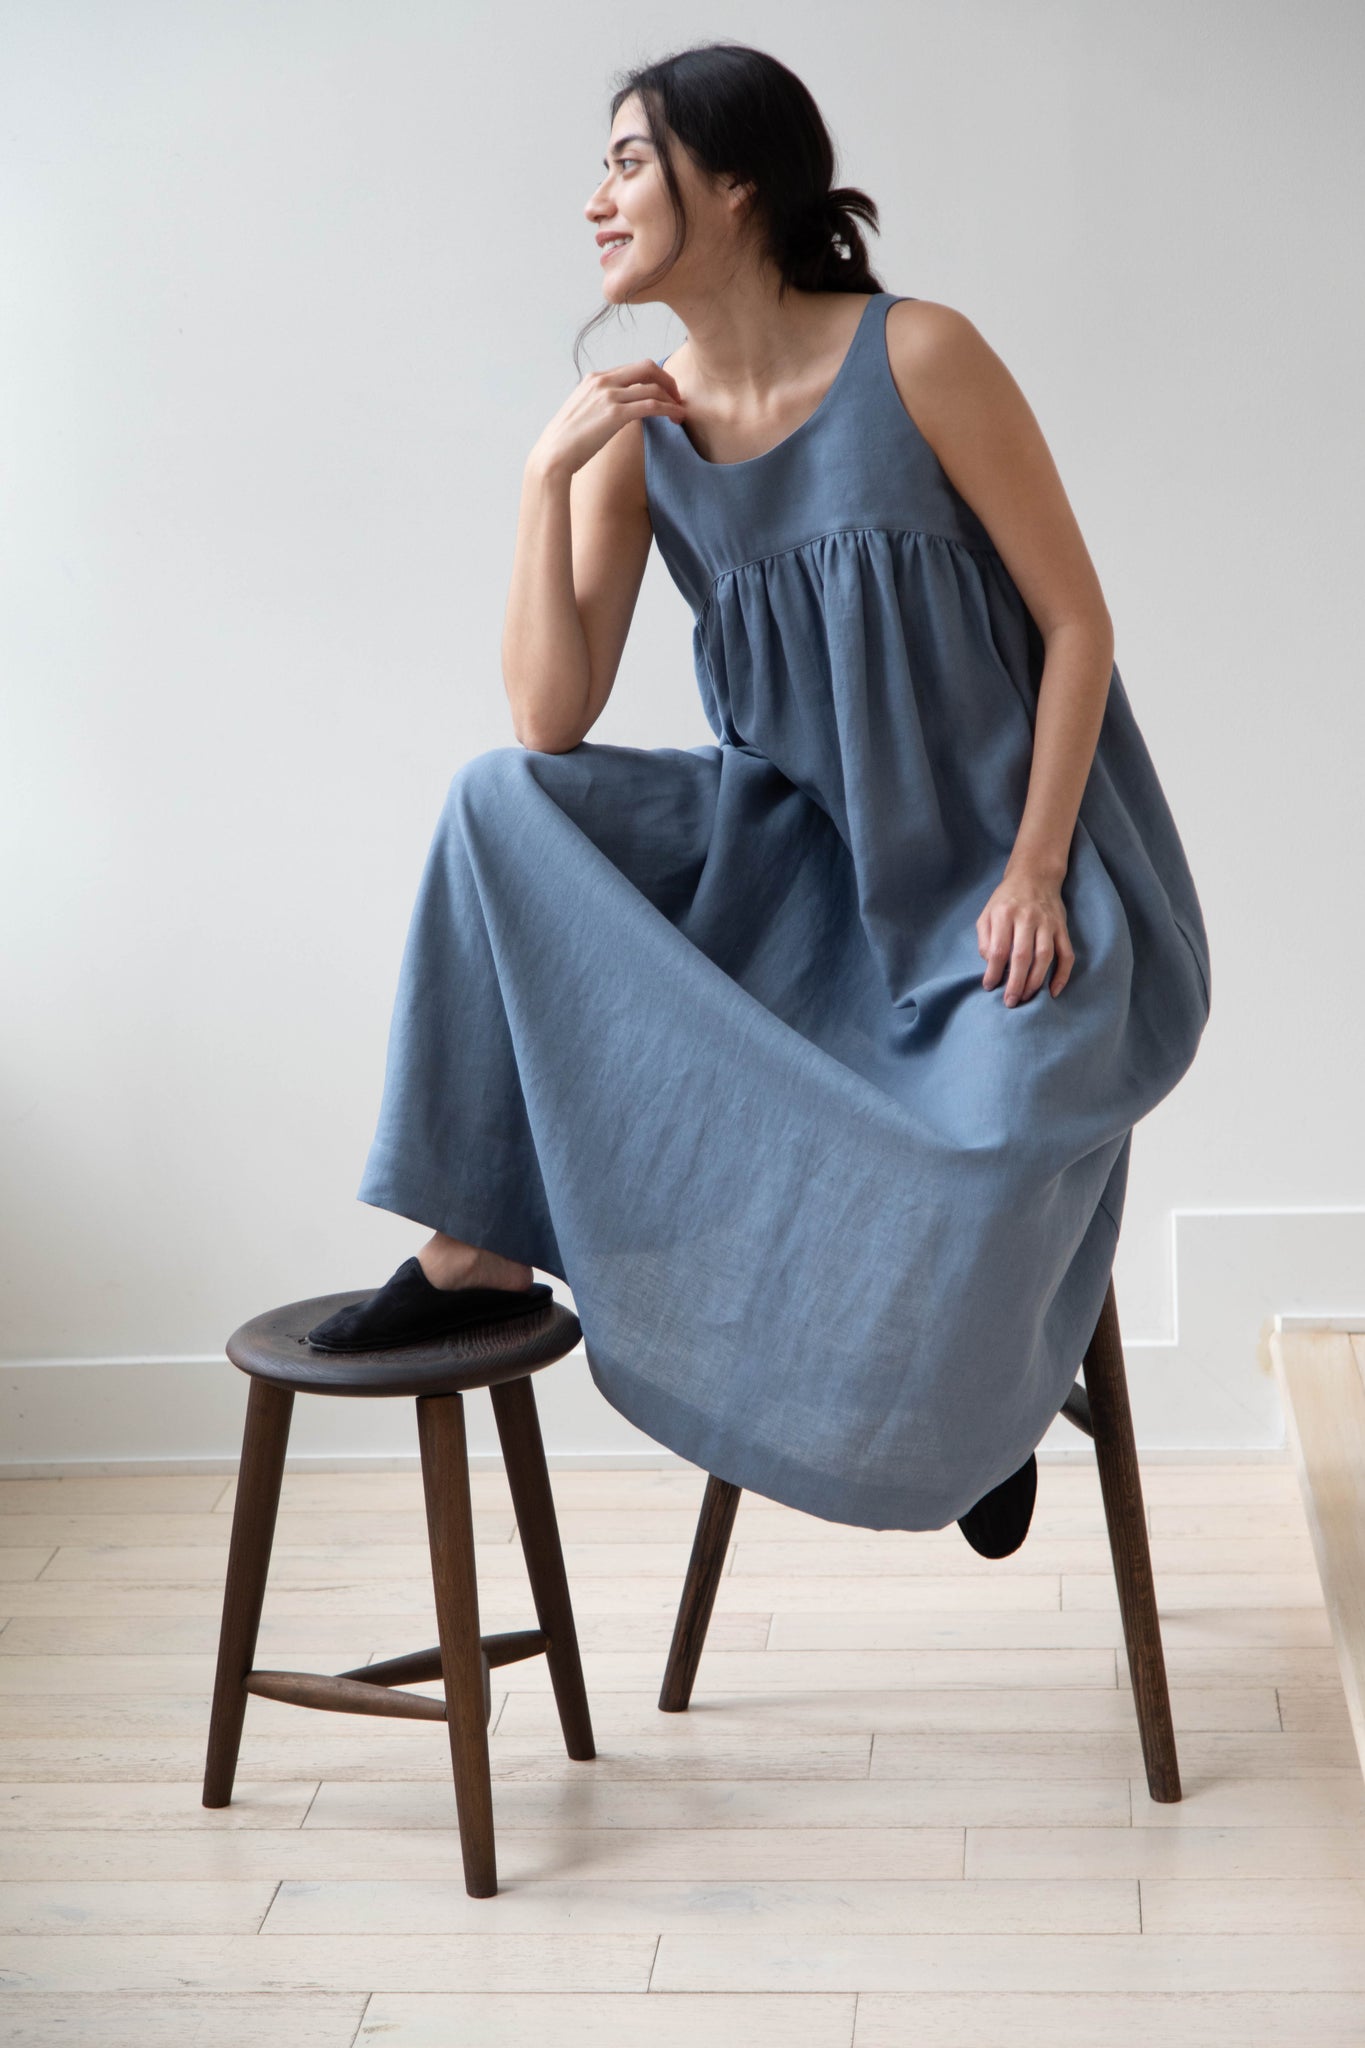 The Loom Linen Empire Dress in Blue Linen